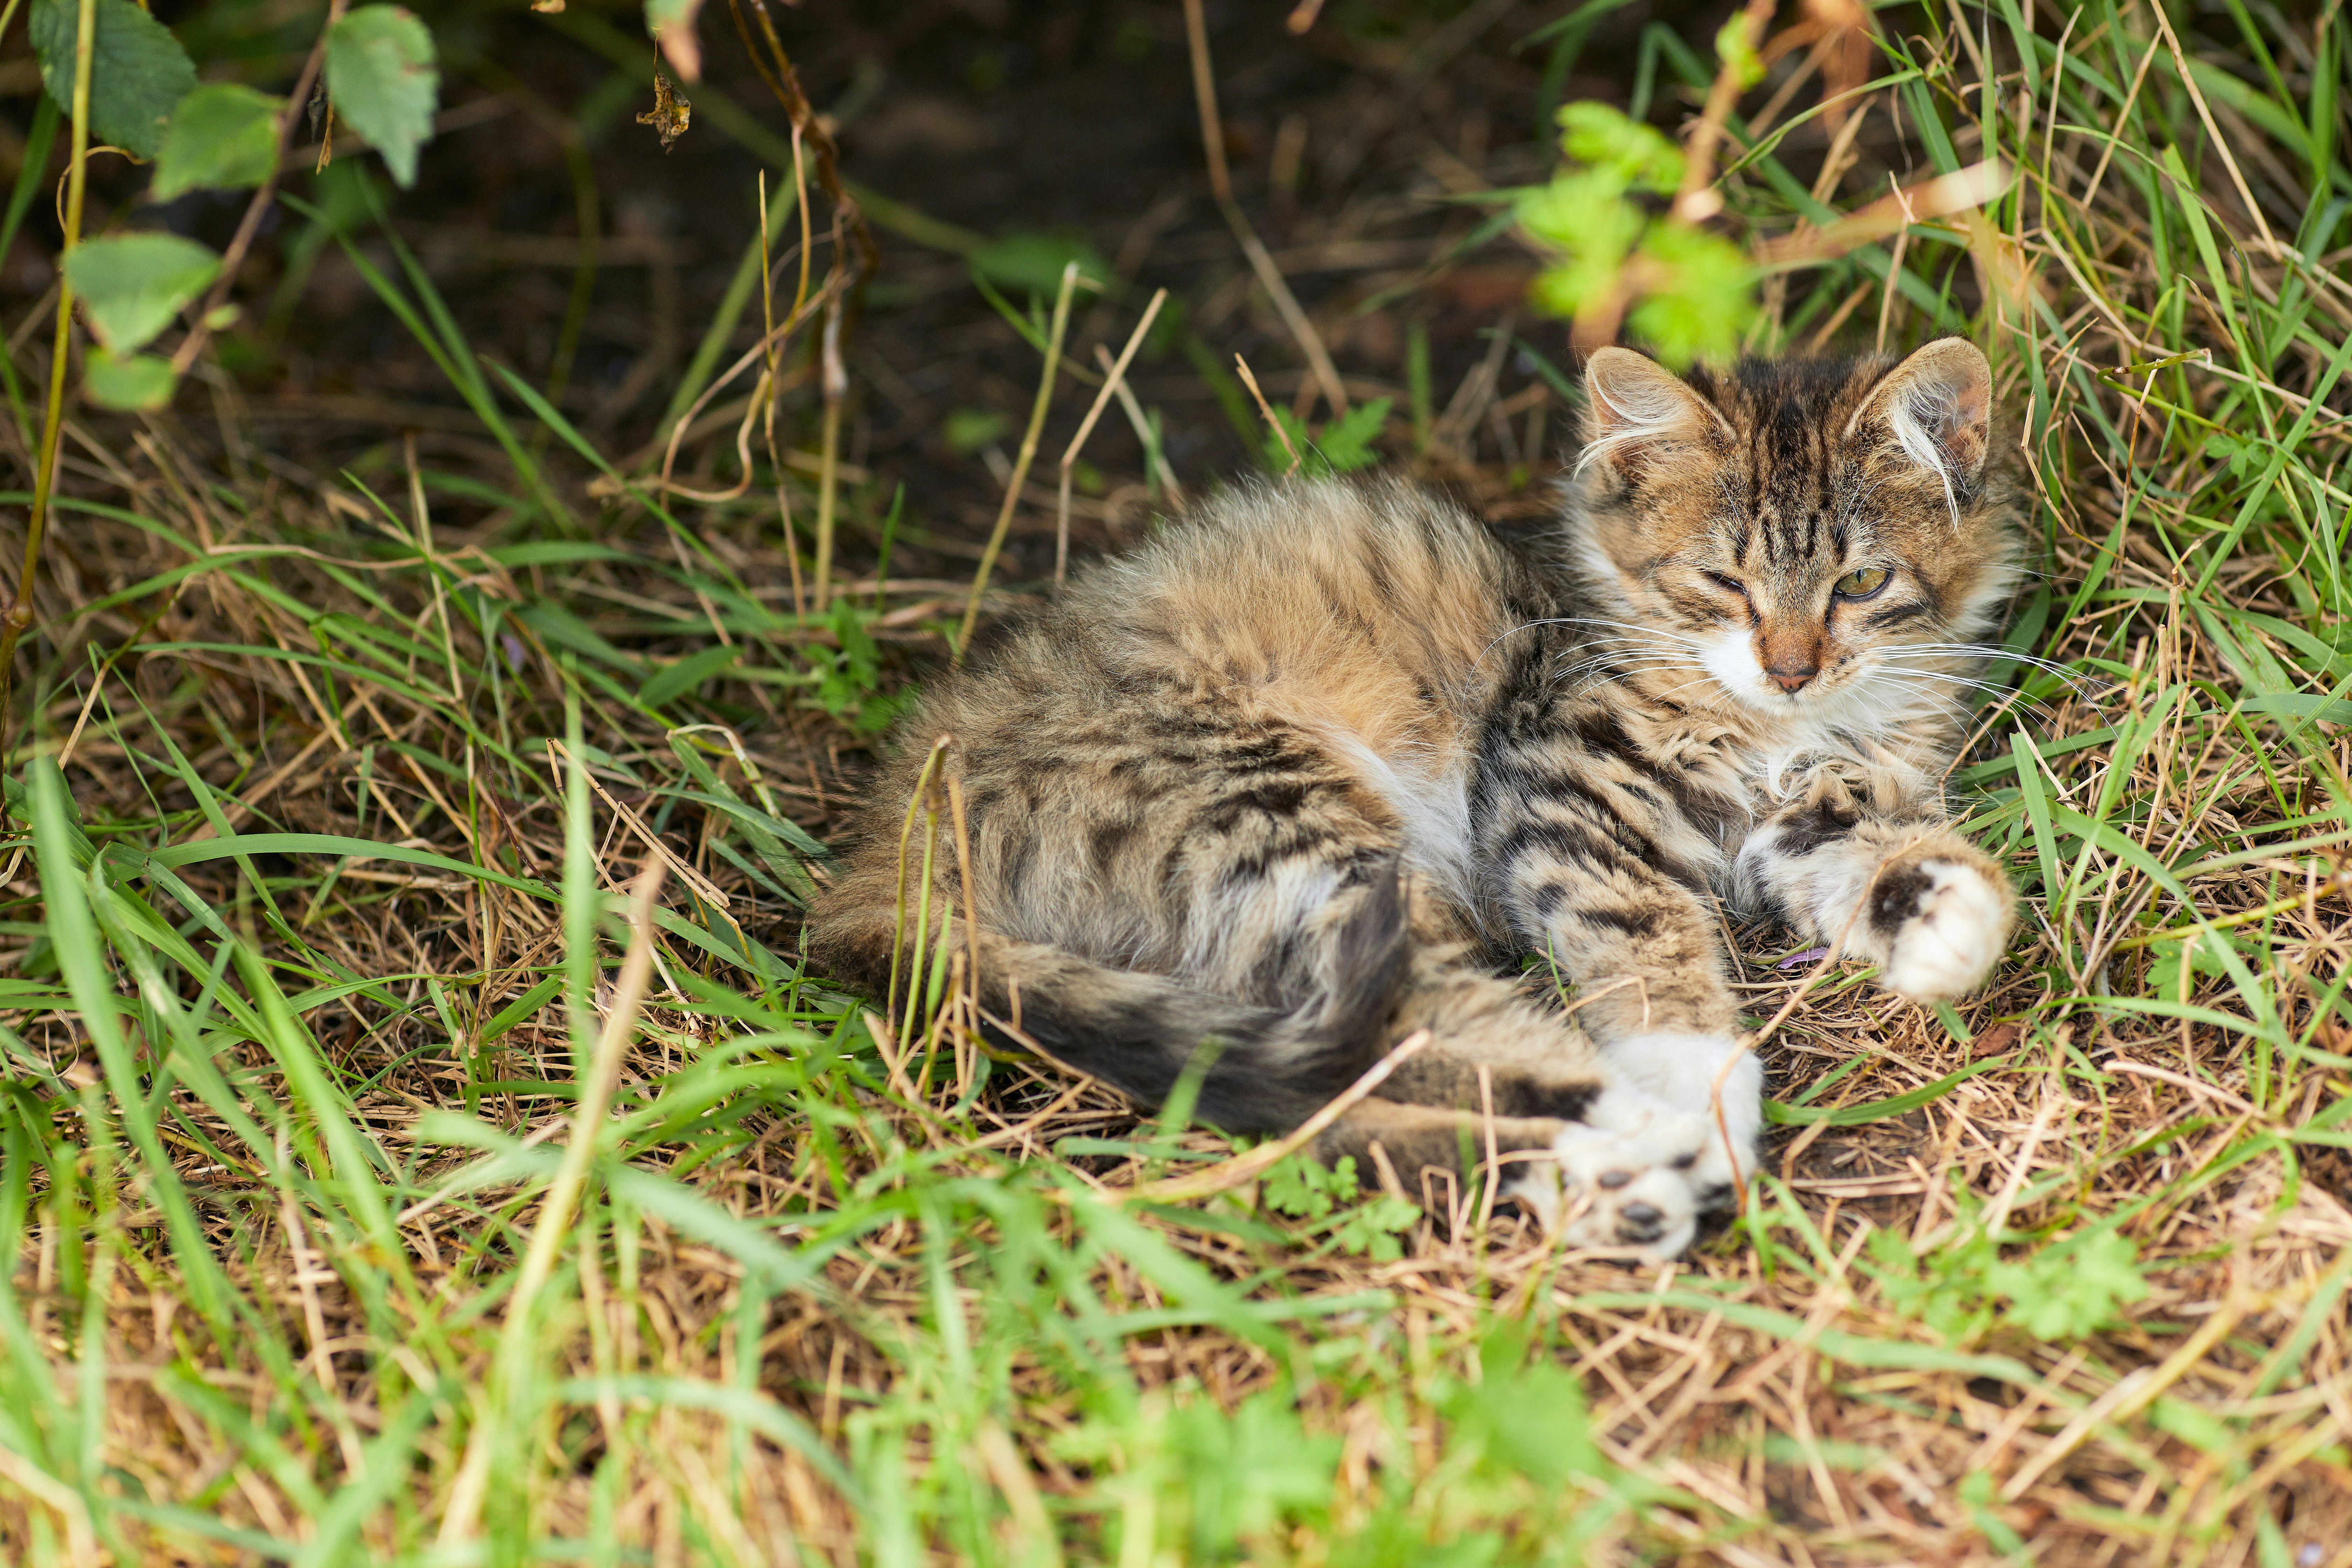 brown tabby cat lying on green grass